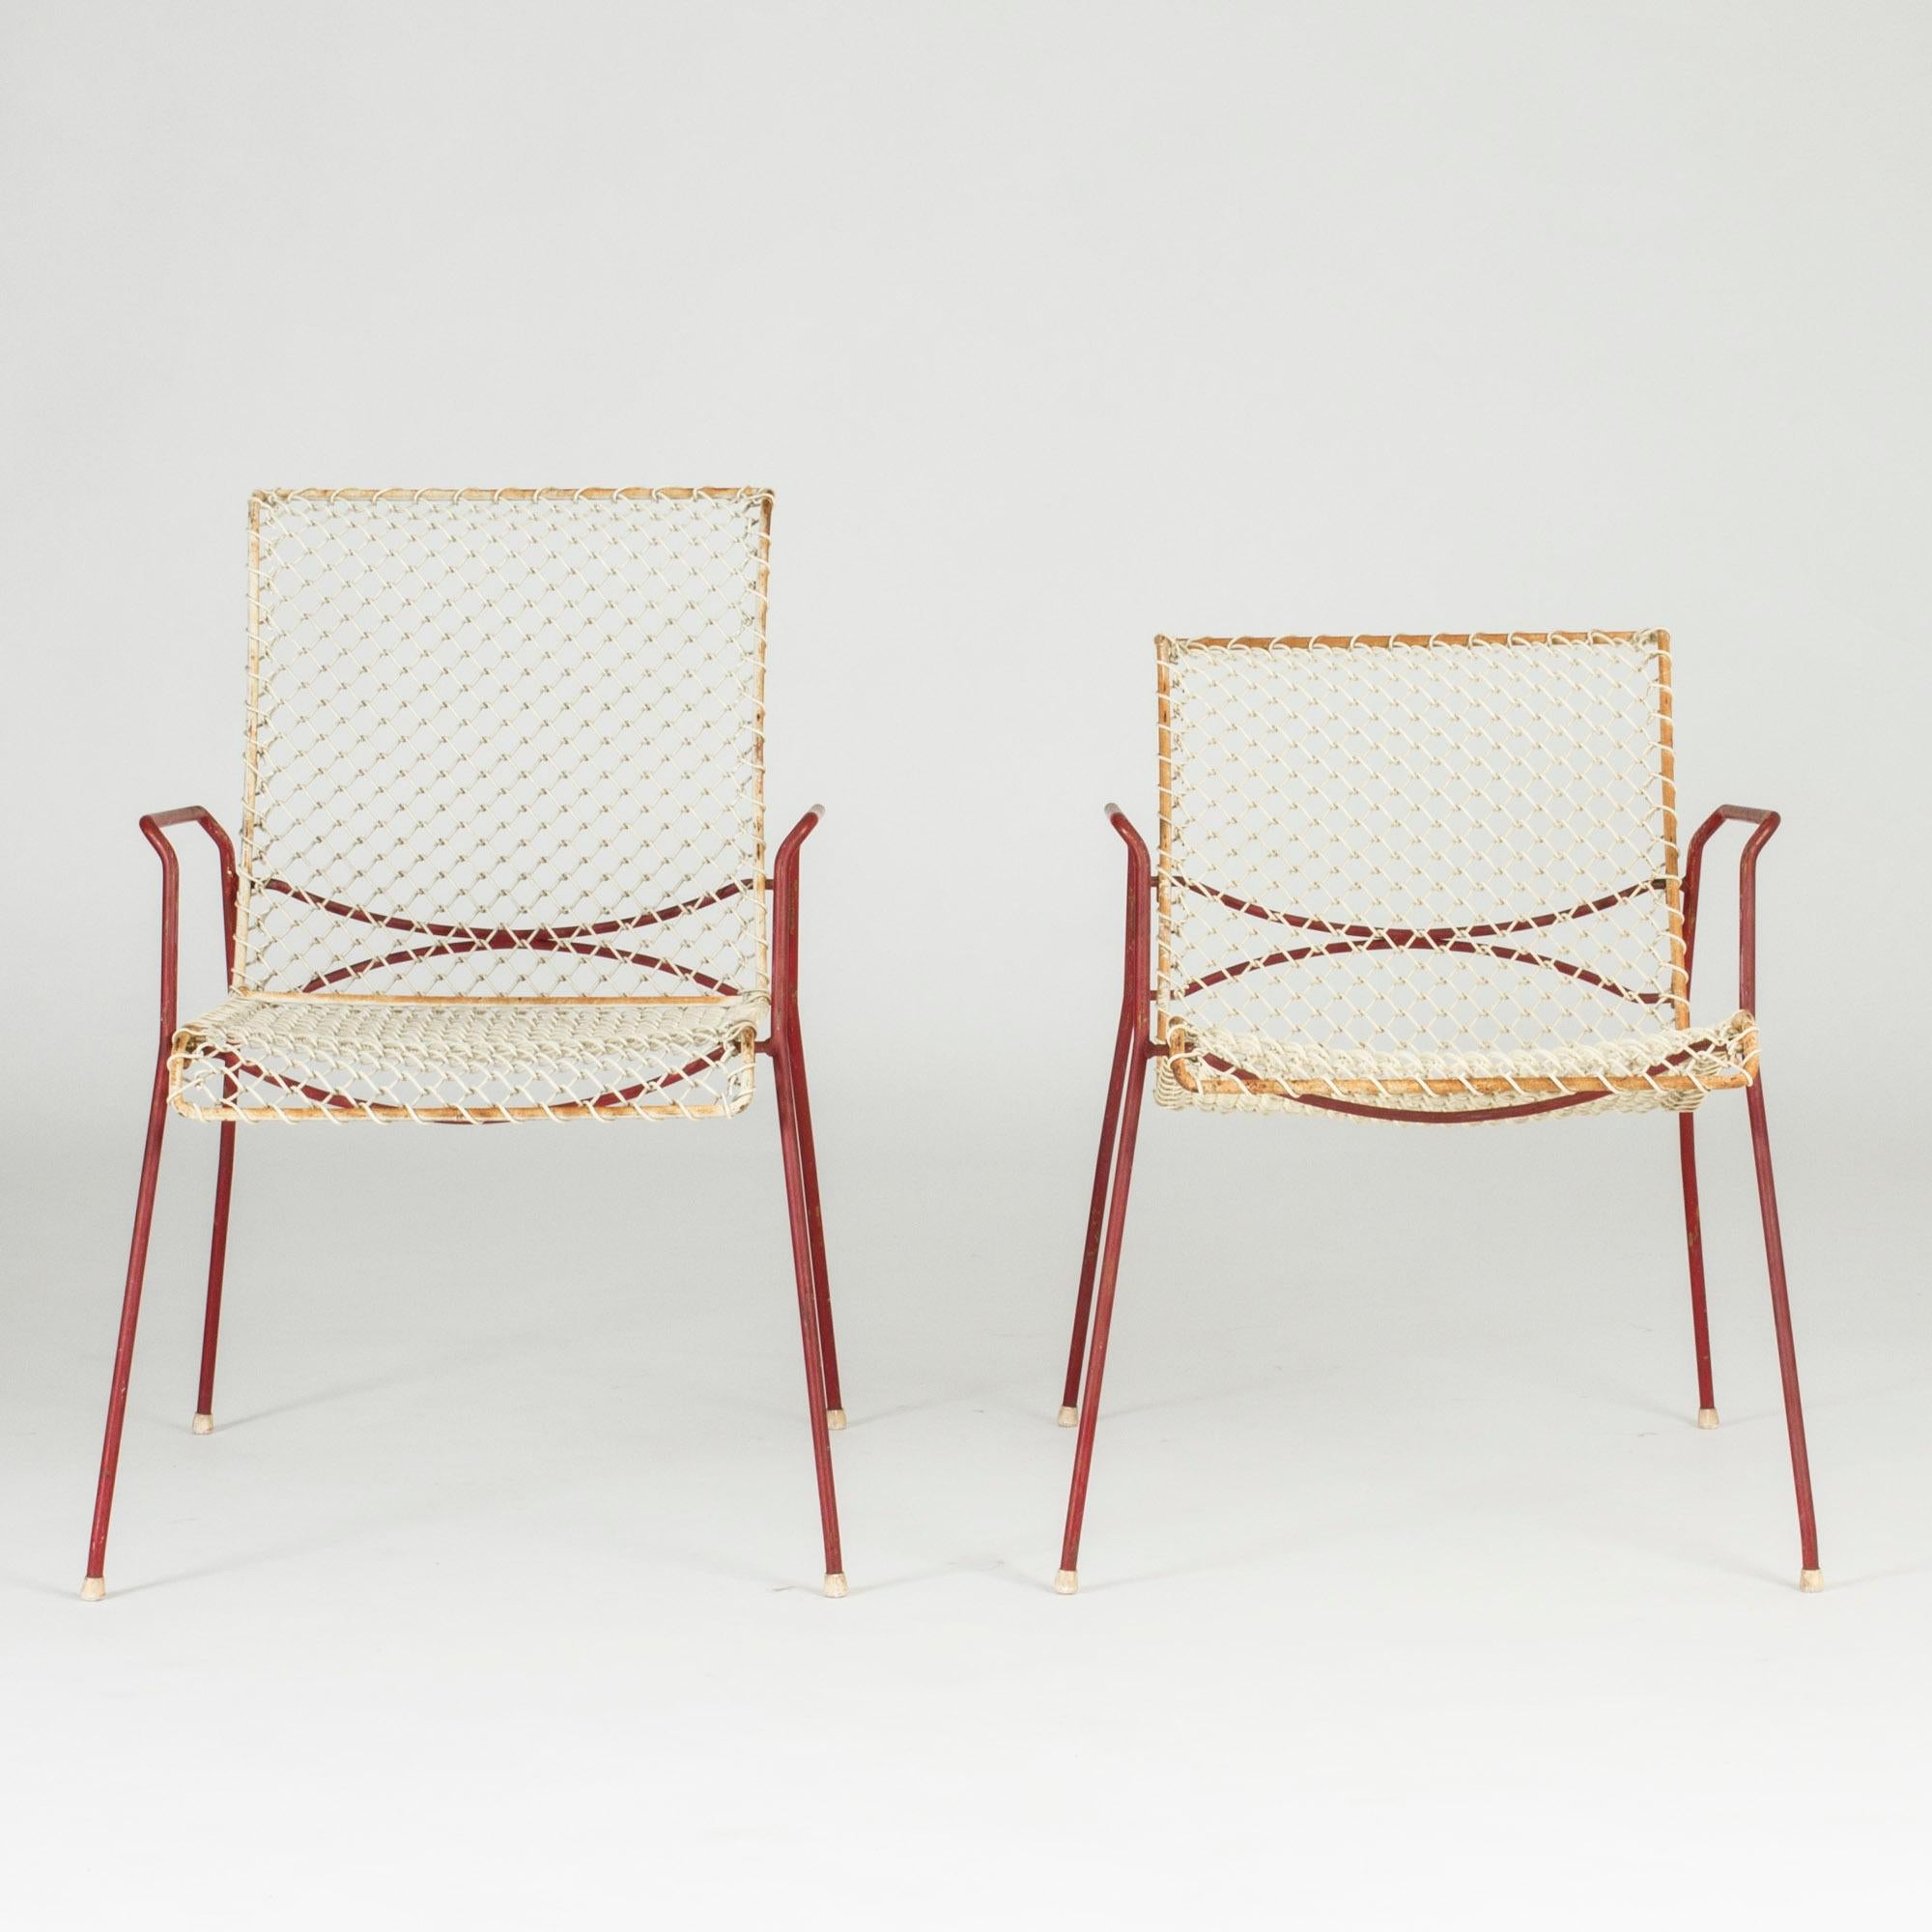 Scandinavian Modern Pair of Garden Chairs from Grythyttan